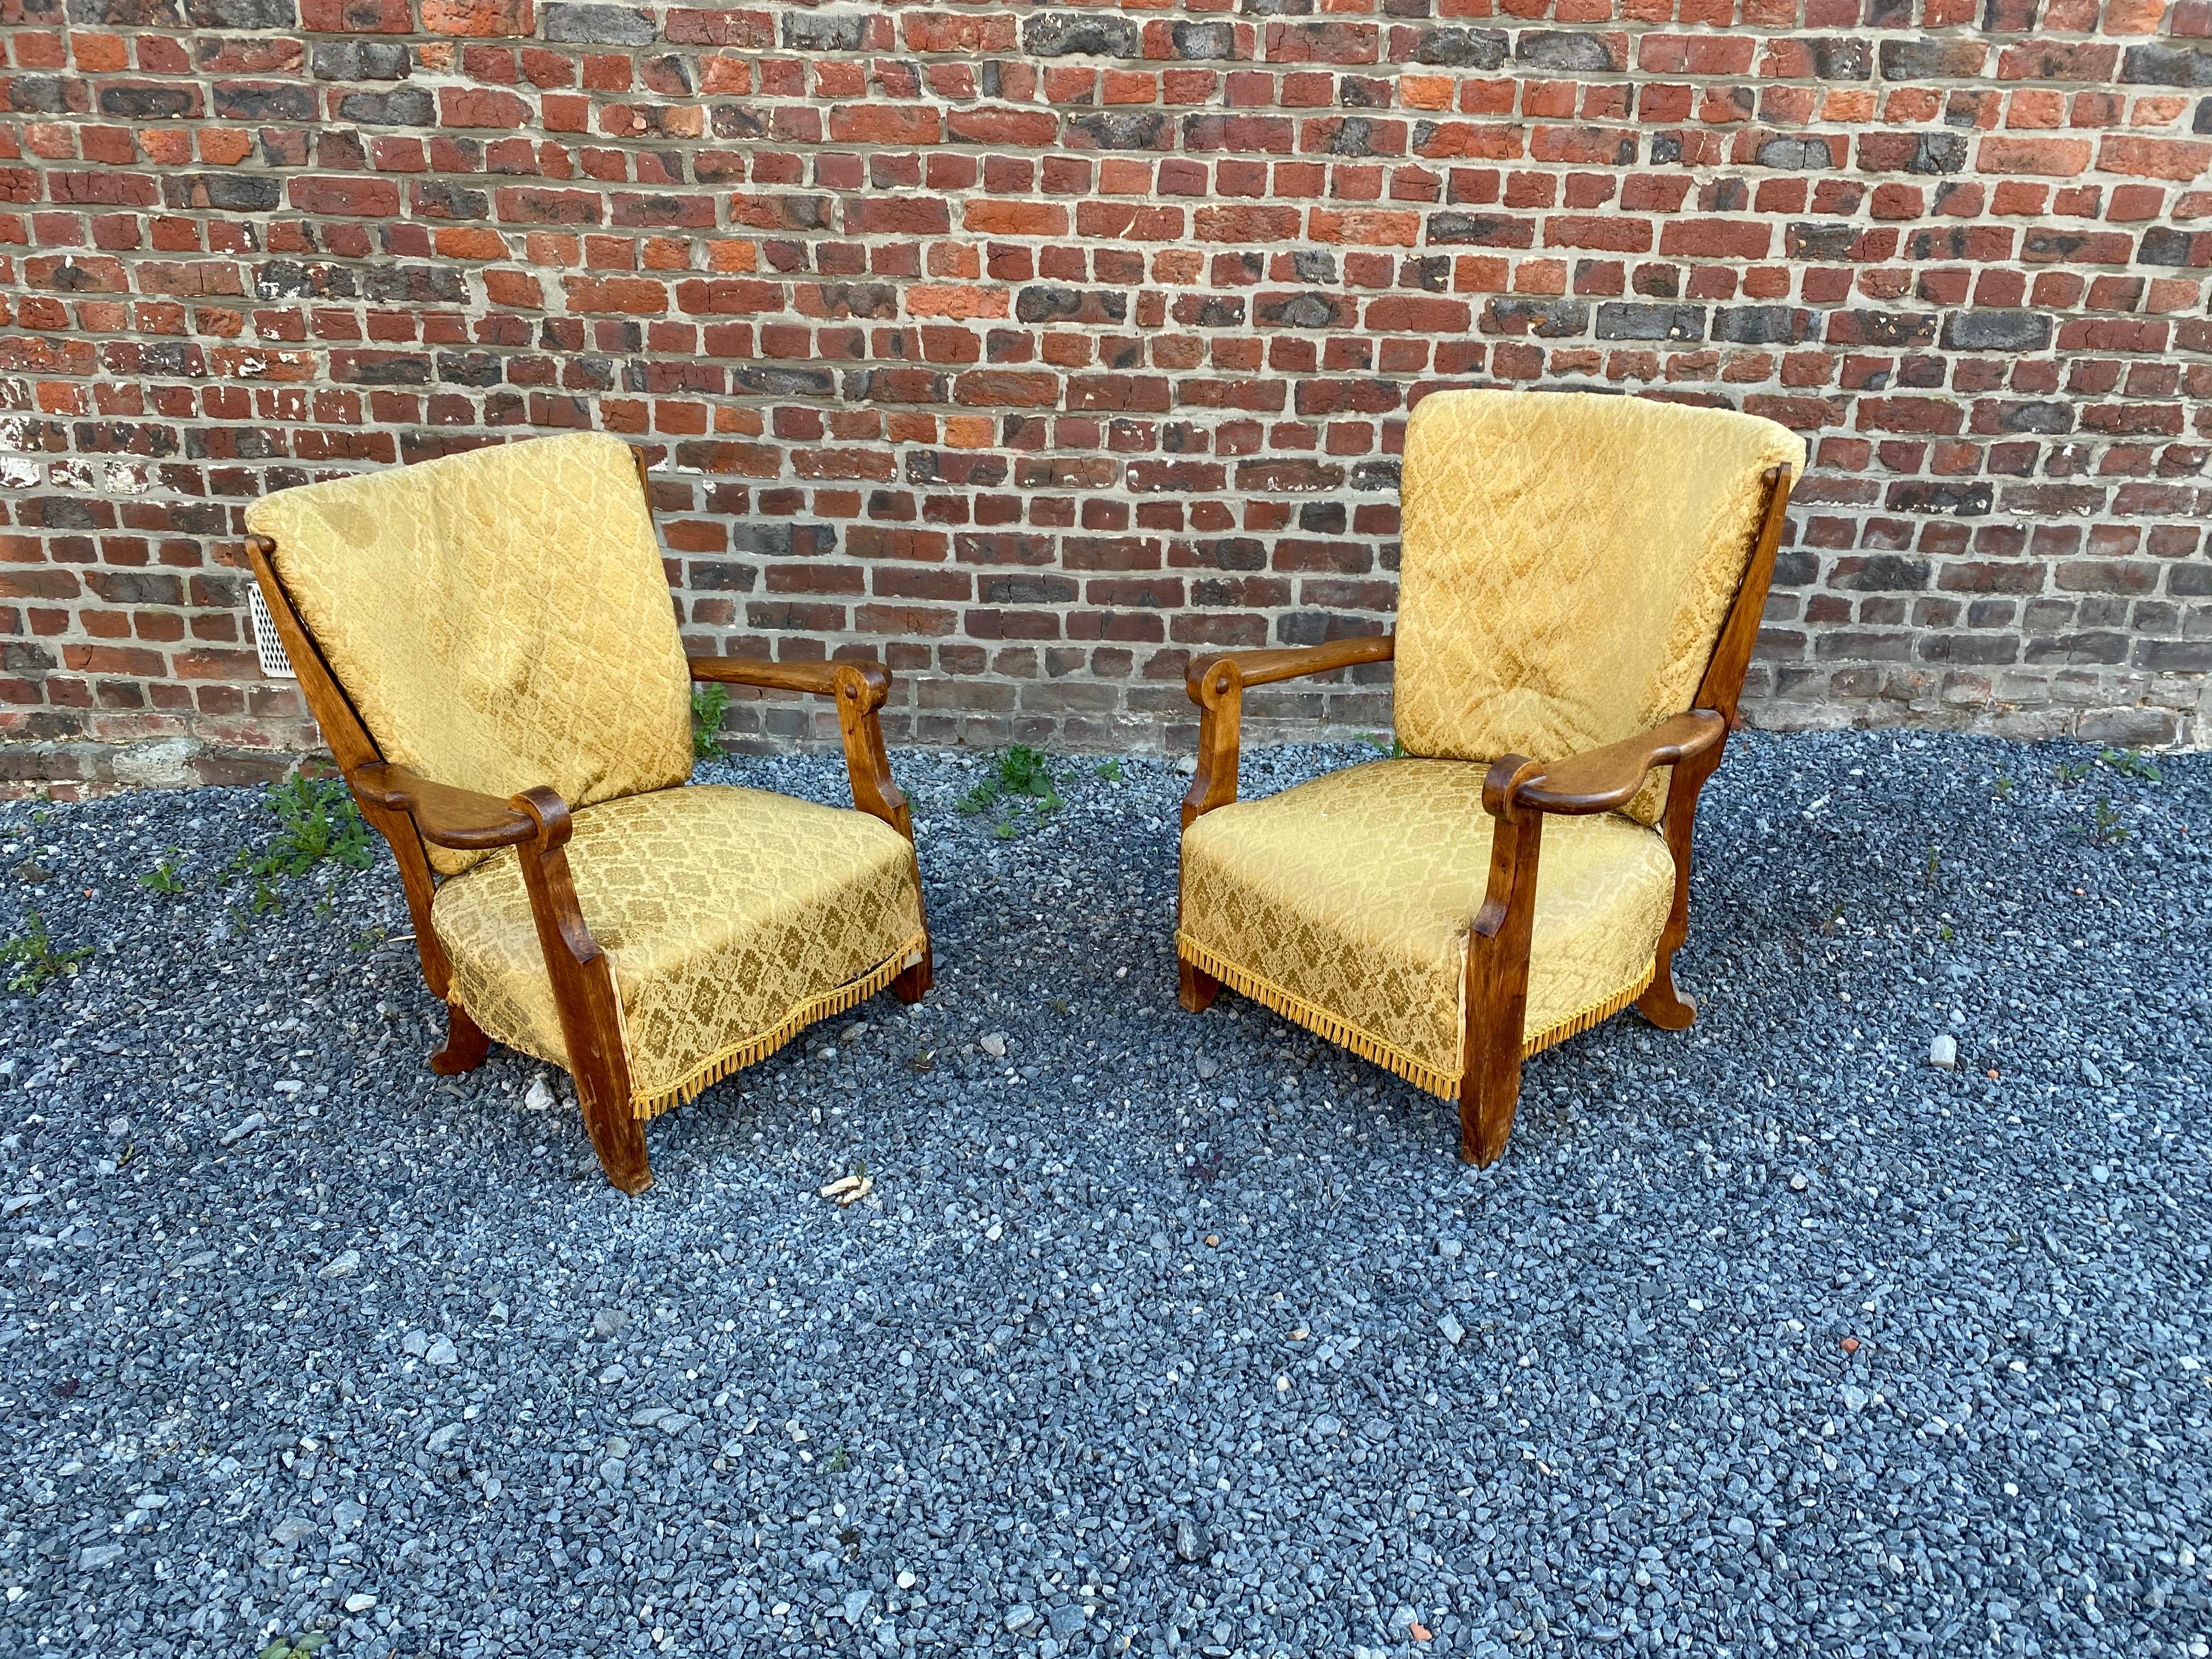 Guillerme et Chambron, Paar Sessel aus Eiche. Edition Votre Maison, um 1950.

der Preis gilt für 1 Sessel
Zwei Sessel sind verfügbar 